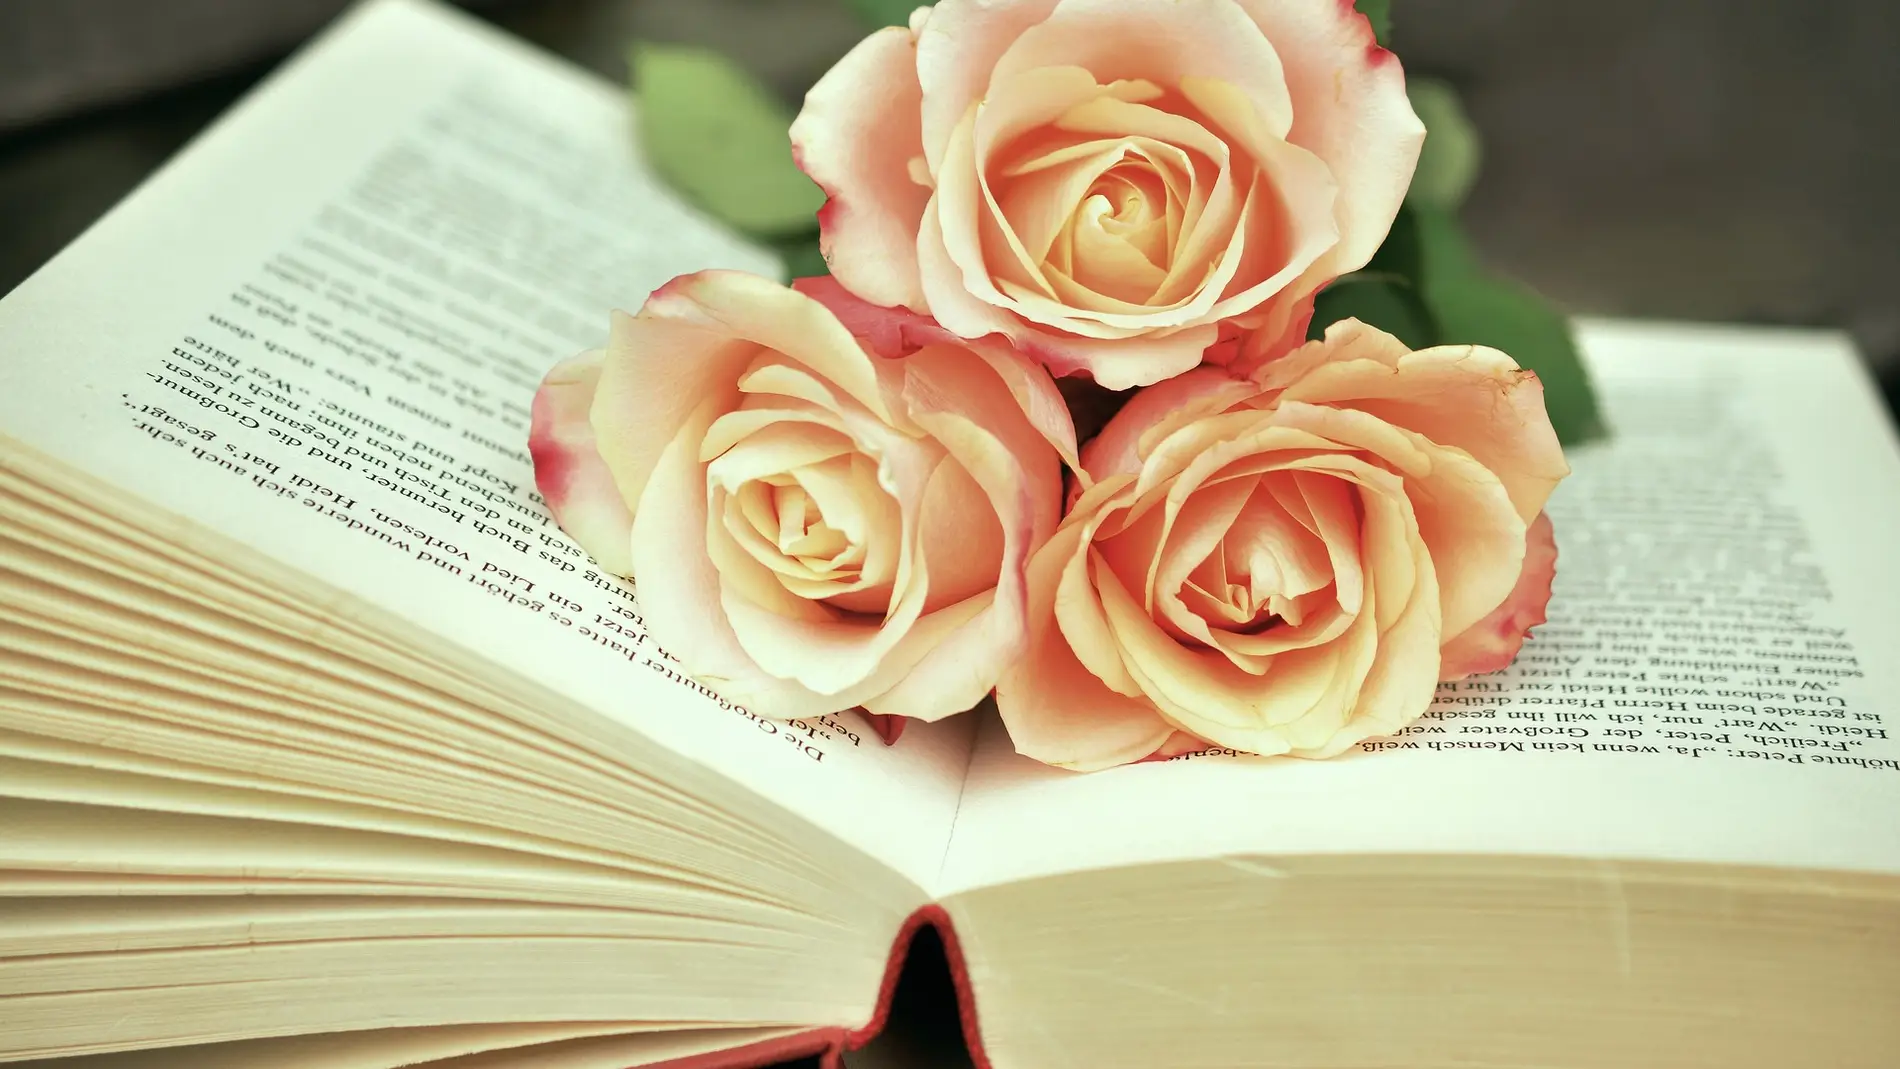 Libro con rosas